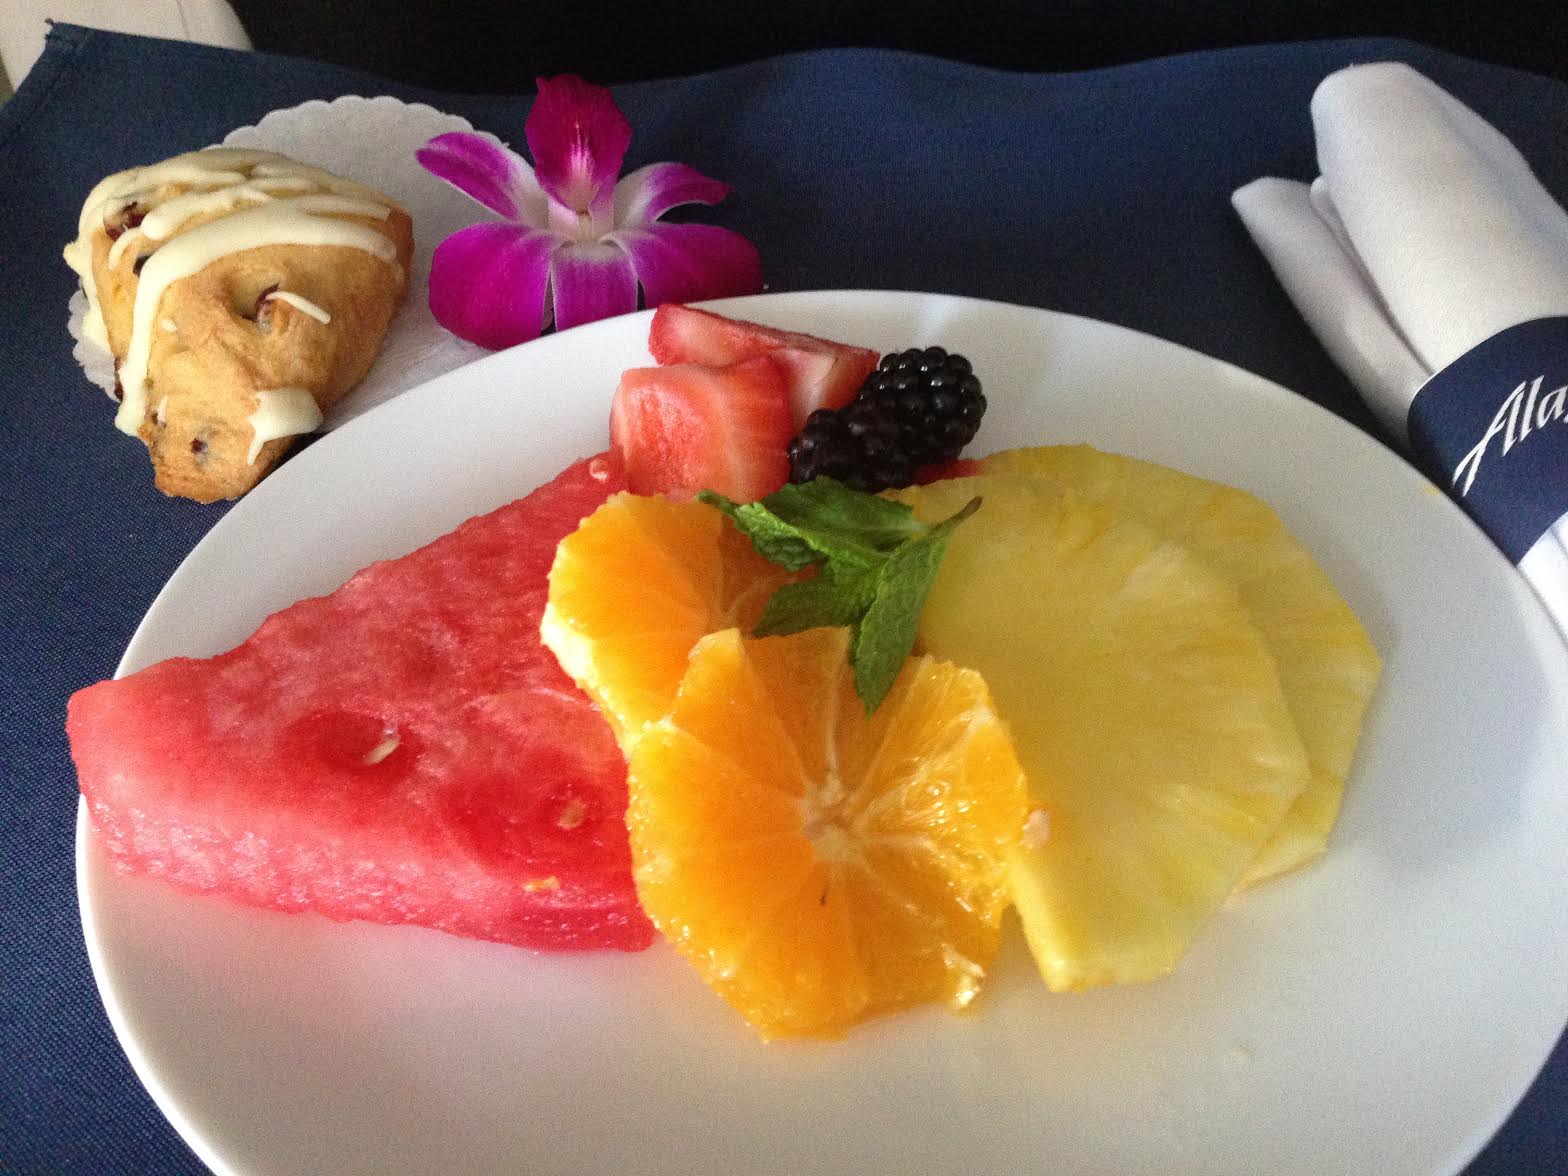 Alaska Airlines First Class meal: Fruit Plate